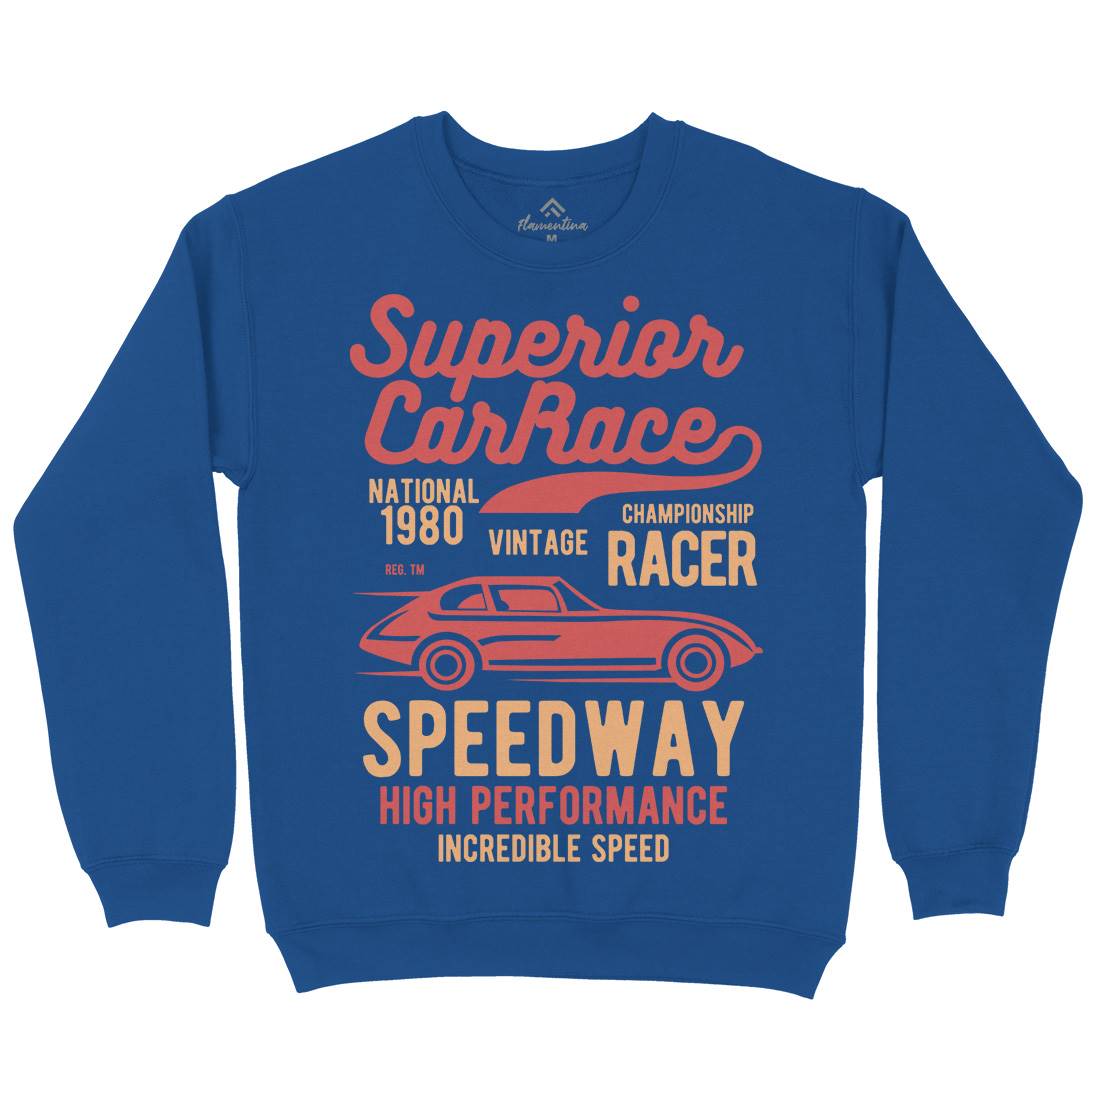 Superior Car Race Kids Crew Neck Sweatshirt Cars B456